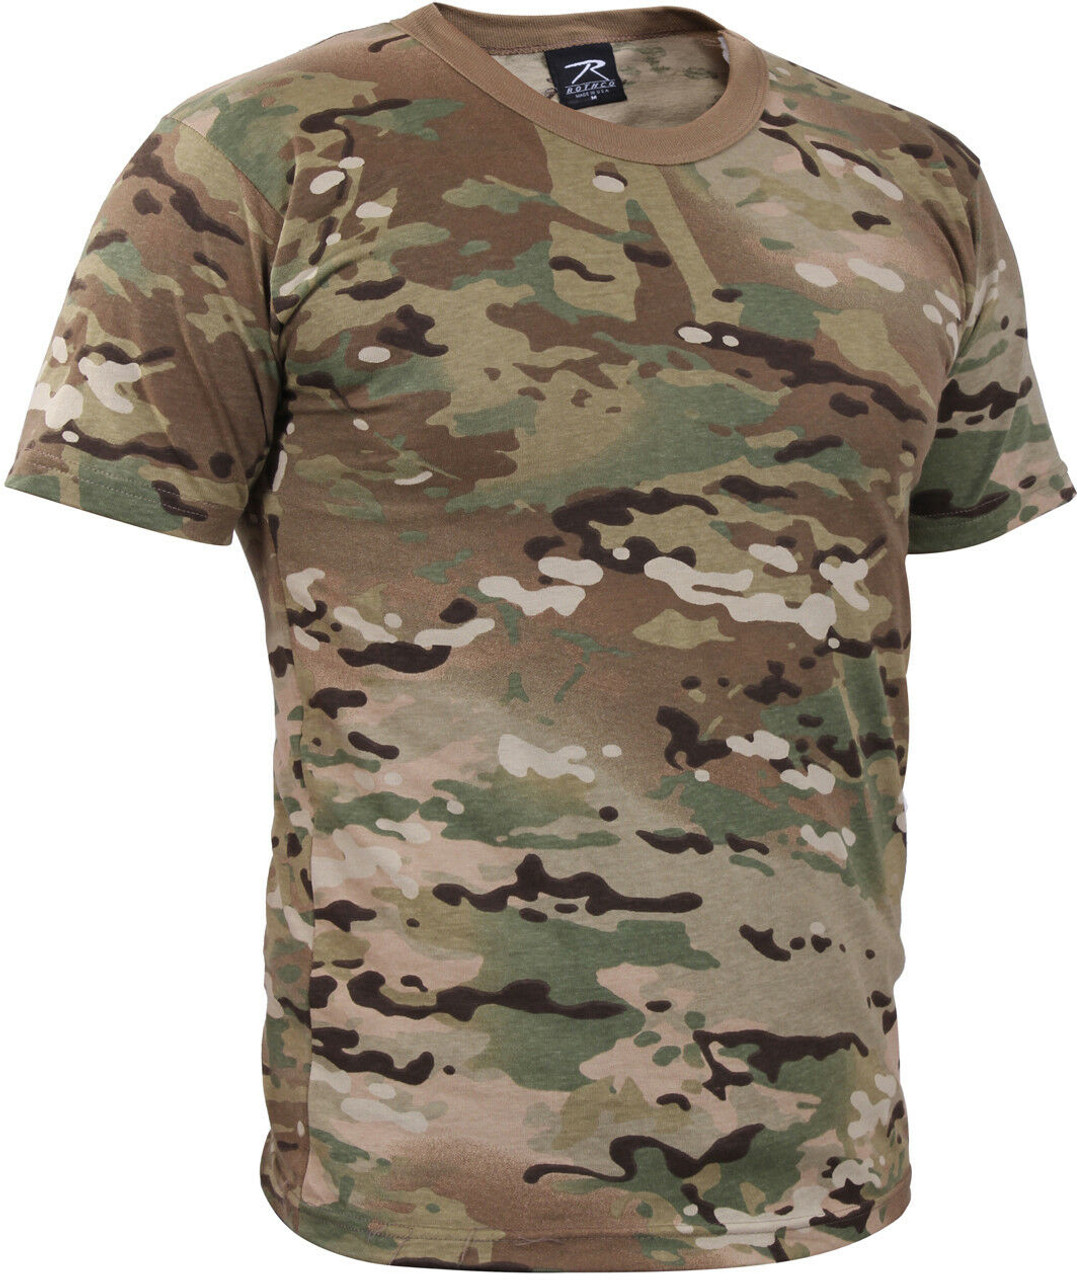 OCP Multicam Camo T-Shirt Military Tee Army Short Sleeve Cotton